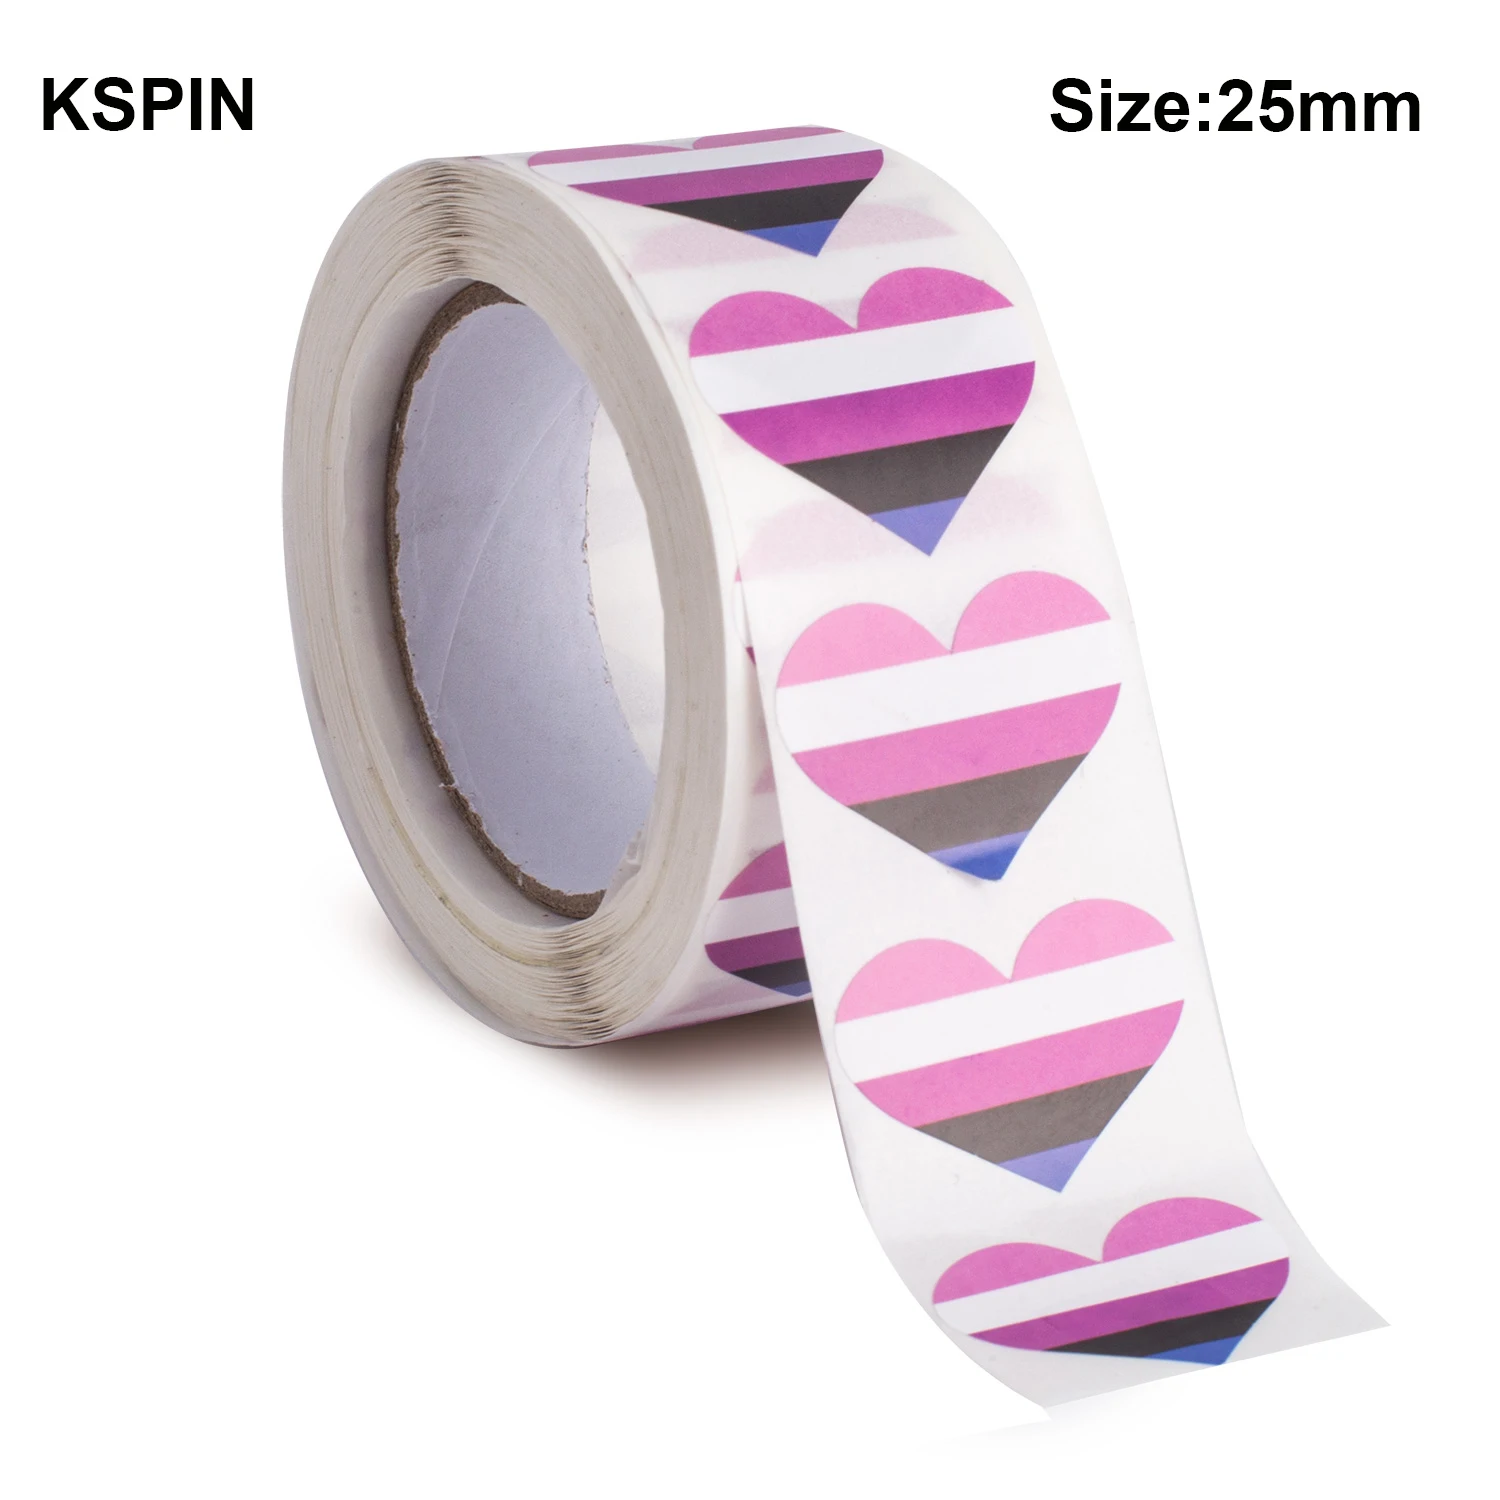 

500PCS Stickers 25mm Gender Fluid Paper Sticker Label Packaging Seals Crafts Favor Tag Toppers Labels